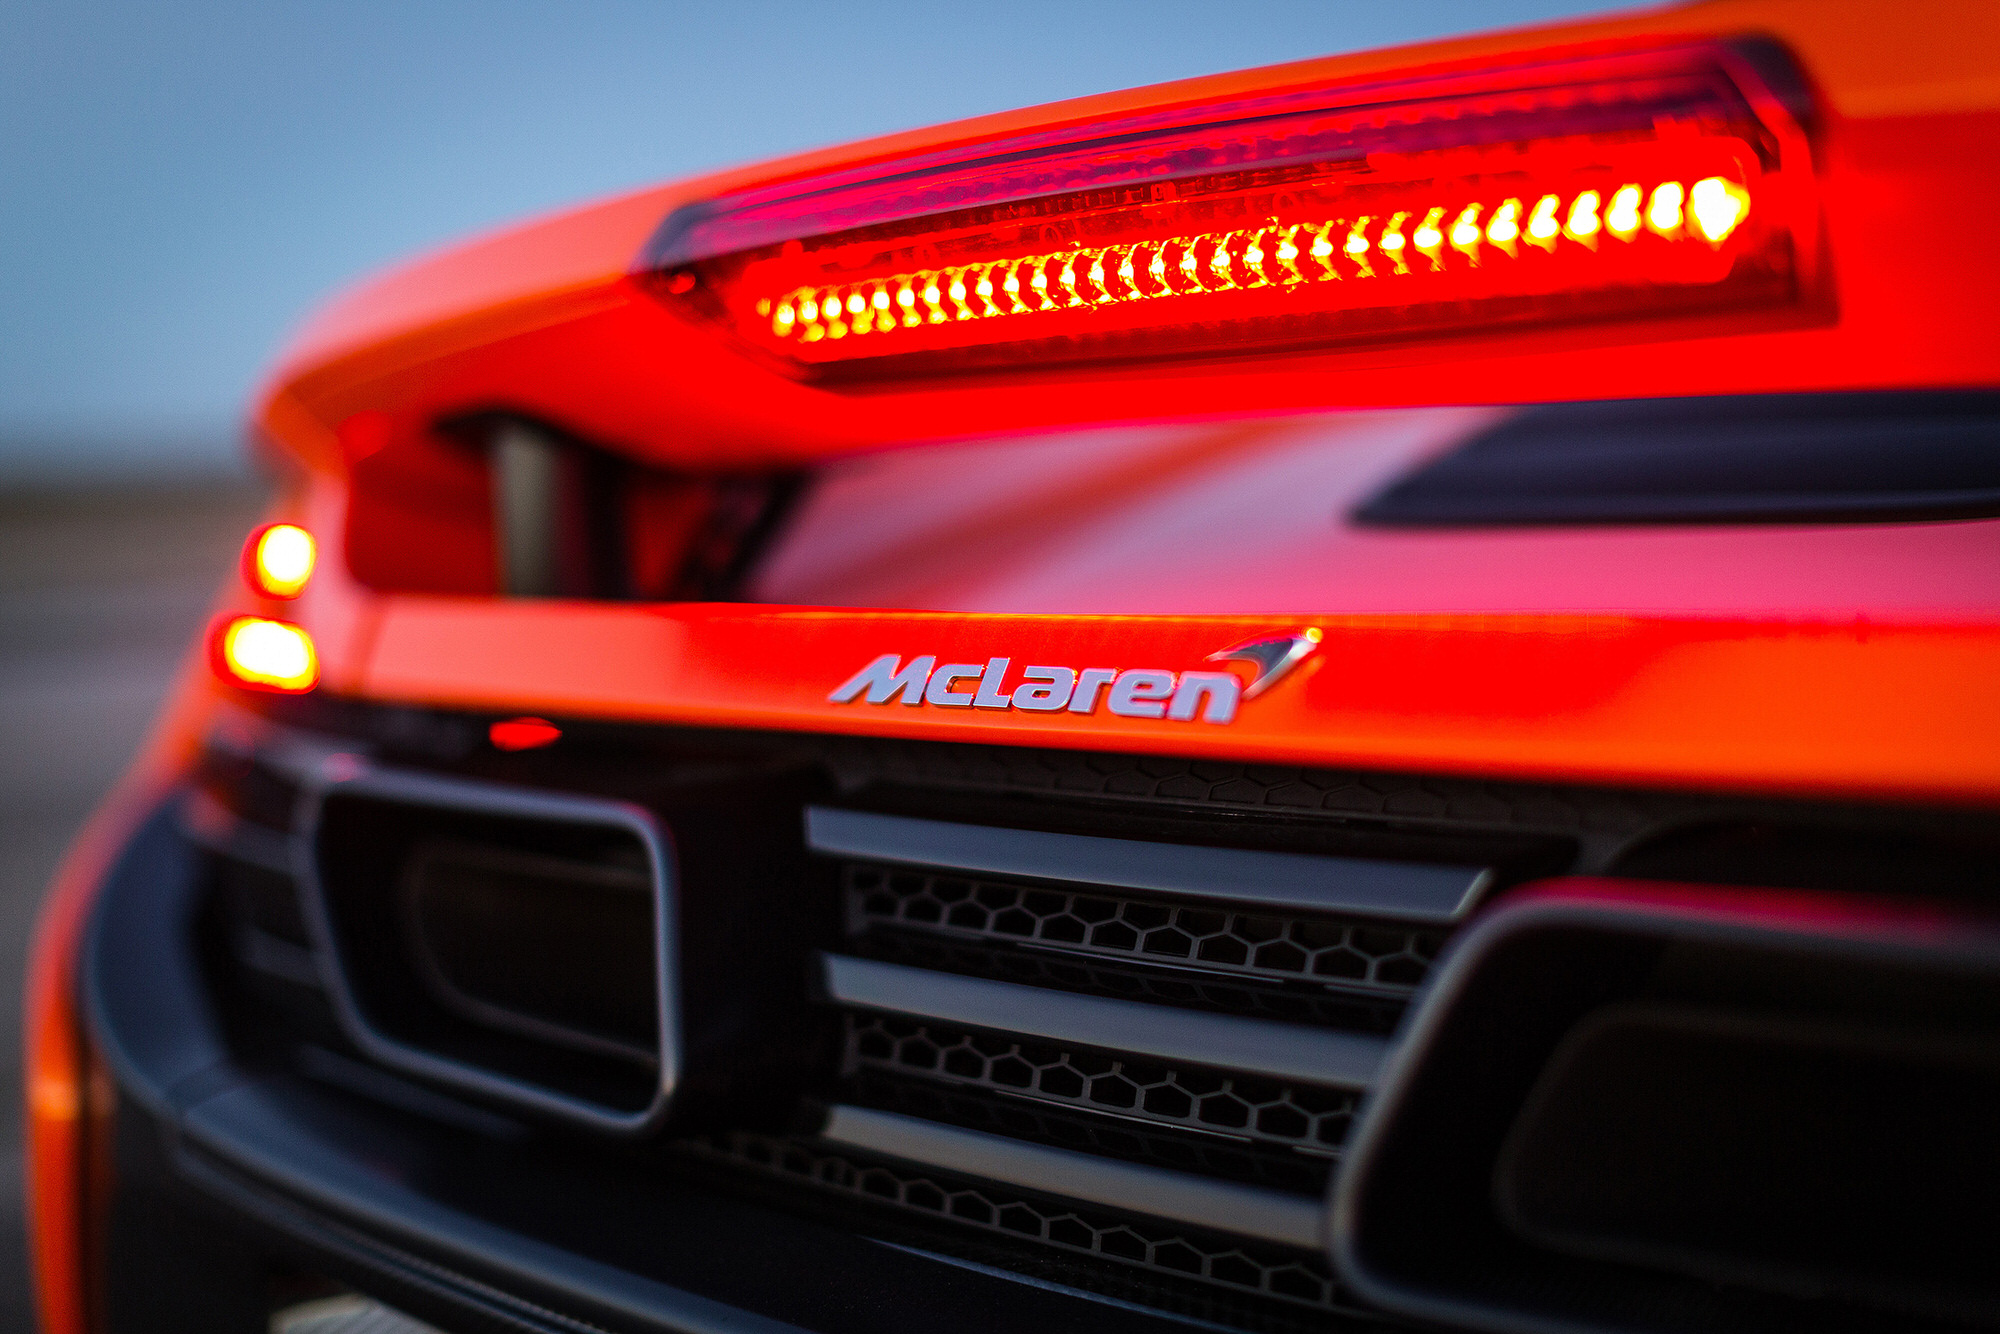 2015 McLaren 650S Spider taillights during Florida sunset